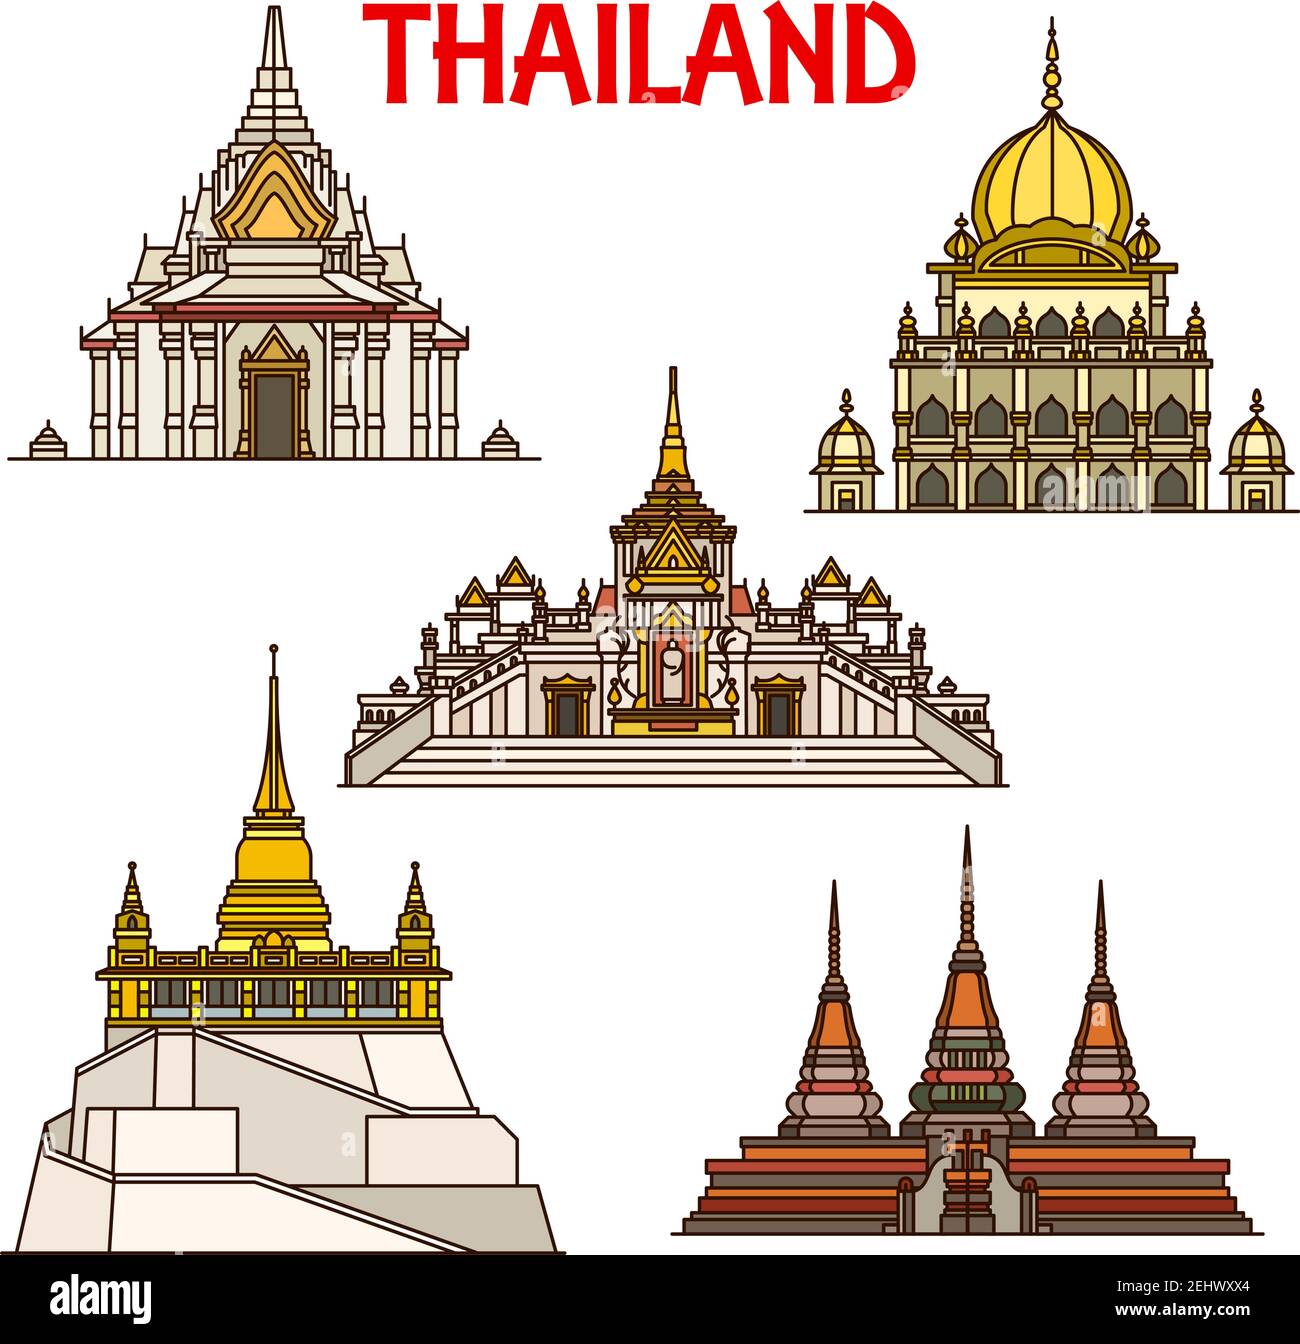 Thai travel landmarks of Bangkok buildings vector icons. Lak mueang or City Pillar Shrine, Sikh Temple, Buddhist temples Wat Pho with Reclining Buddha Stock Vector